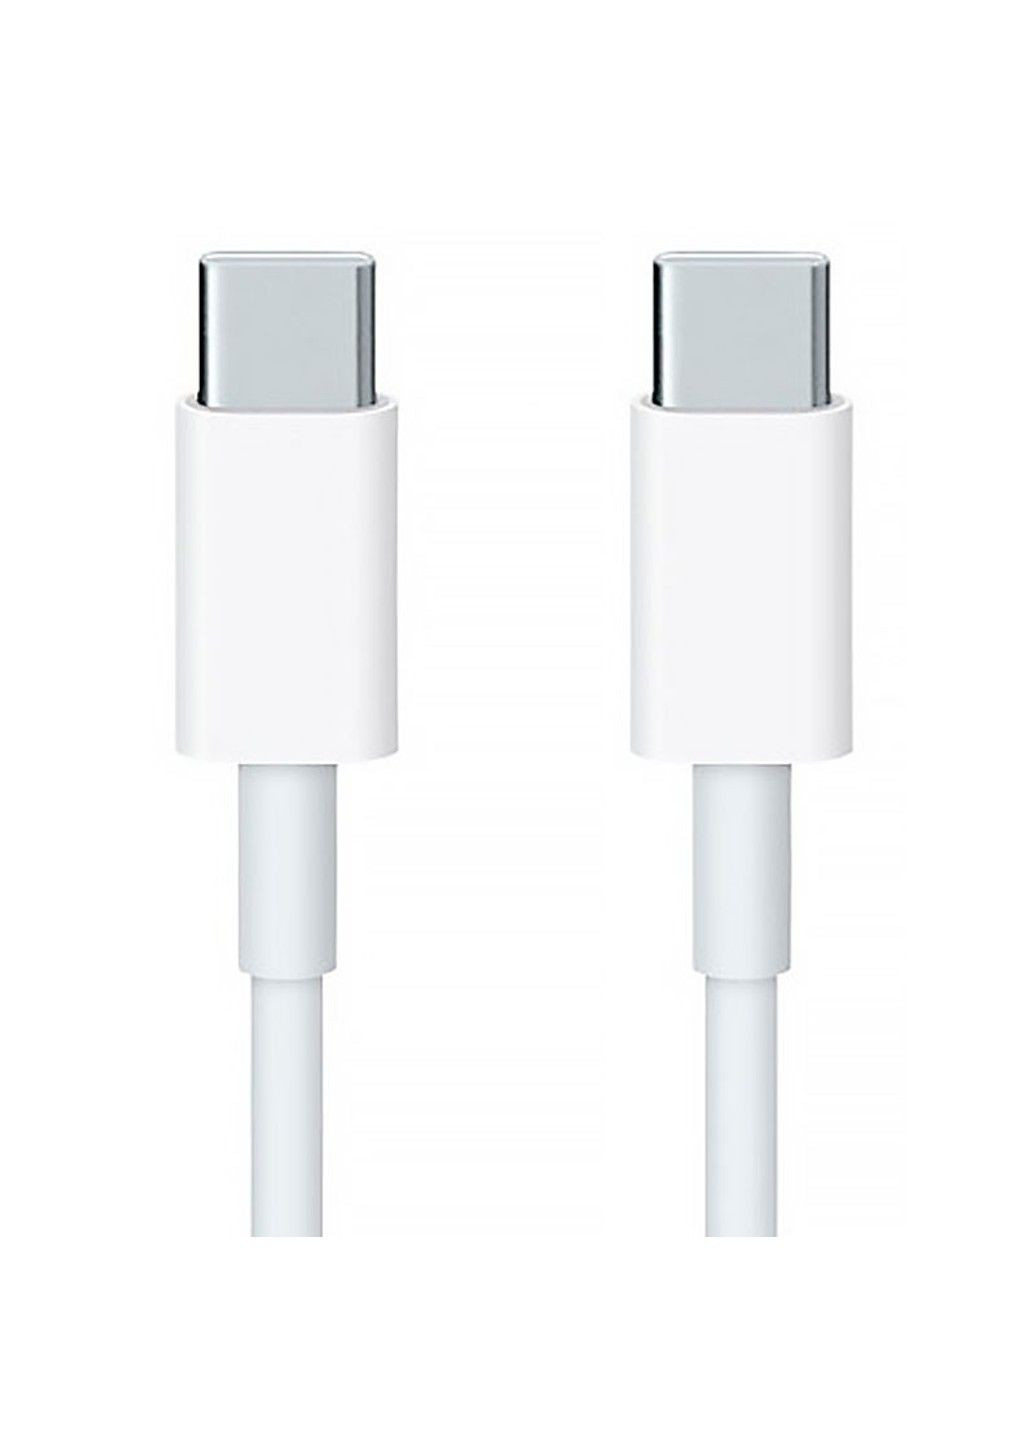 Дата кабель USB-C to USB-C for Apple (AAA) (2m) (box) Brand_A_Class (291881642)